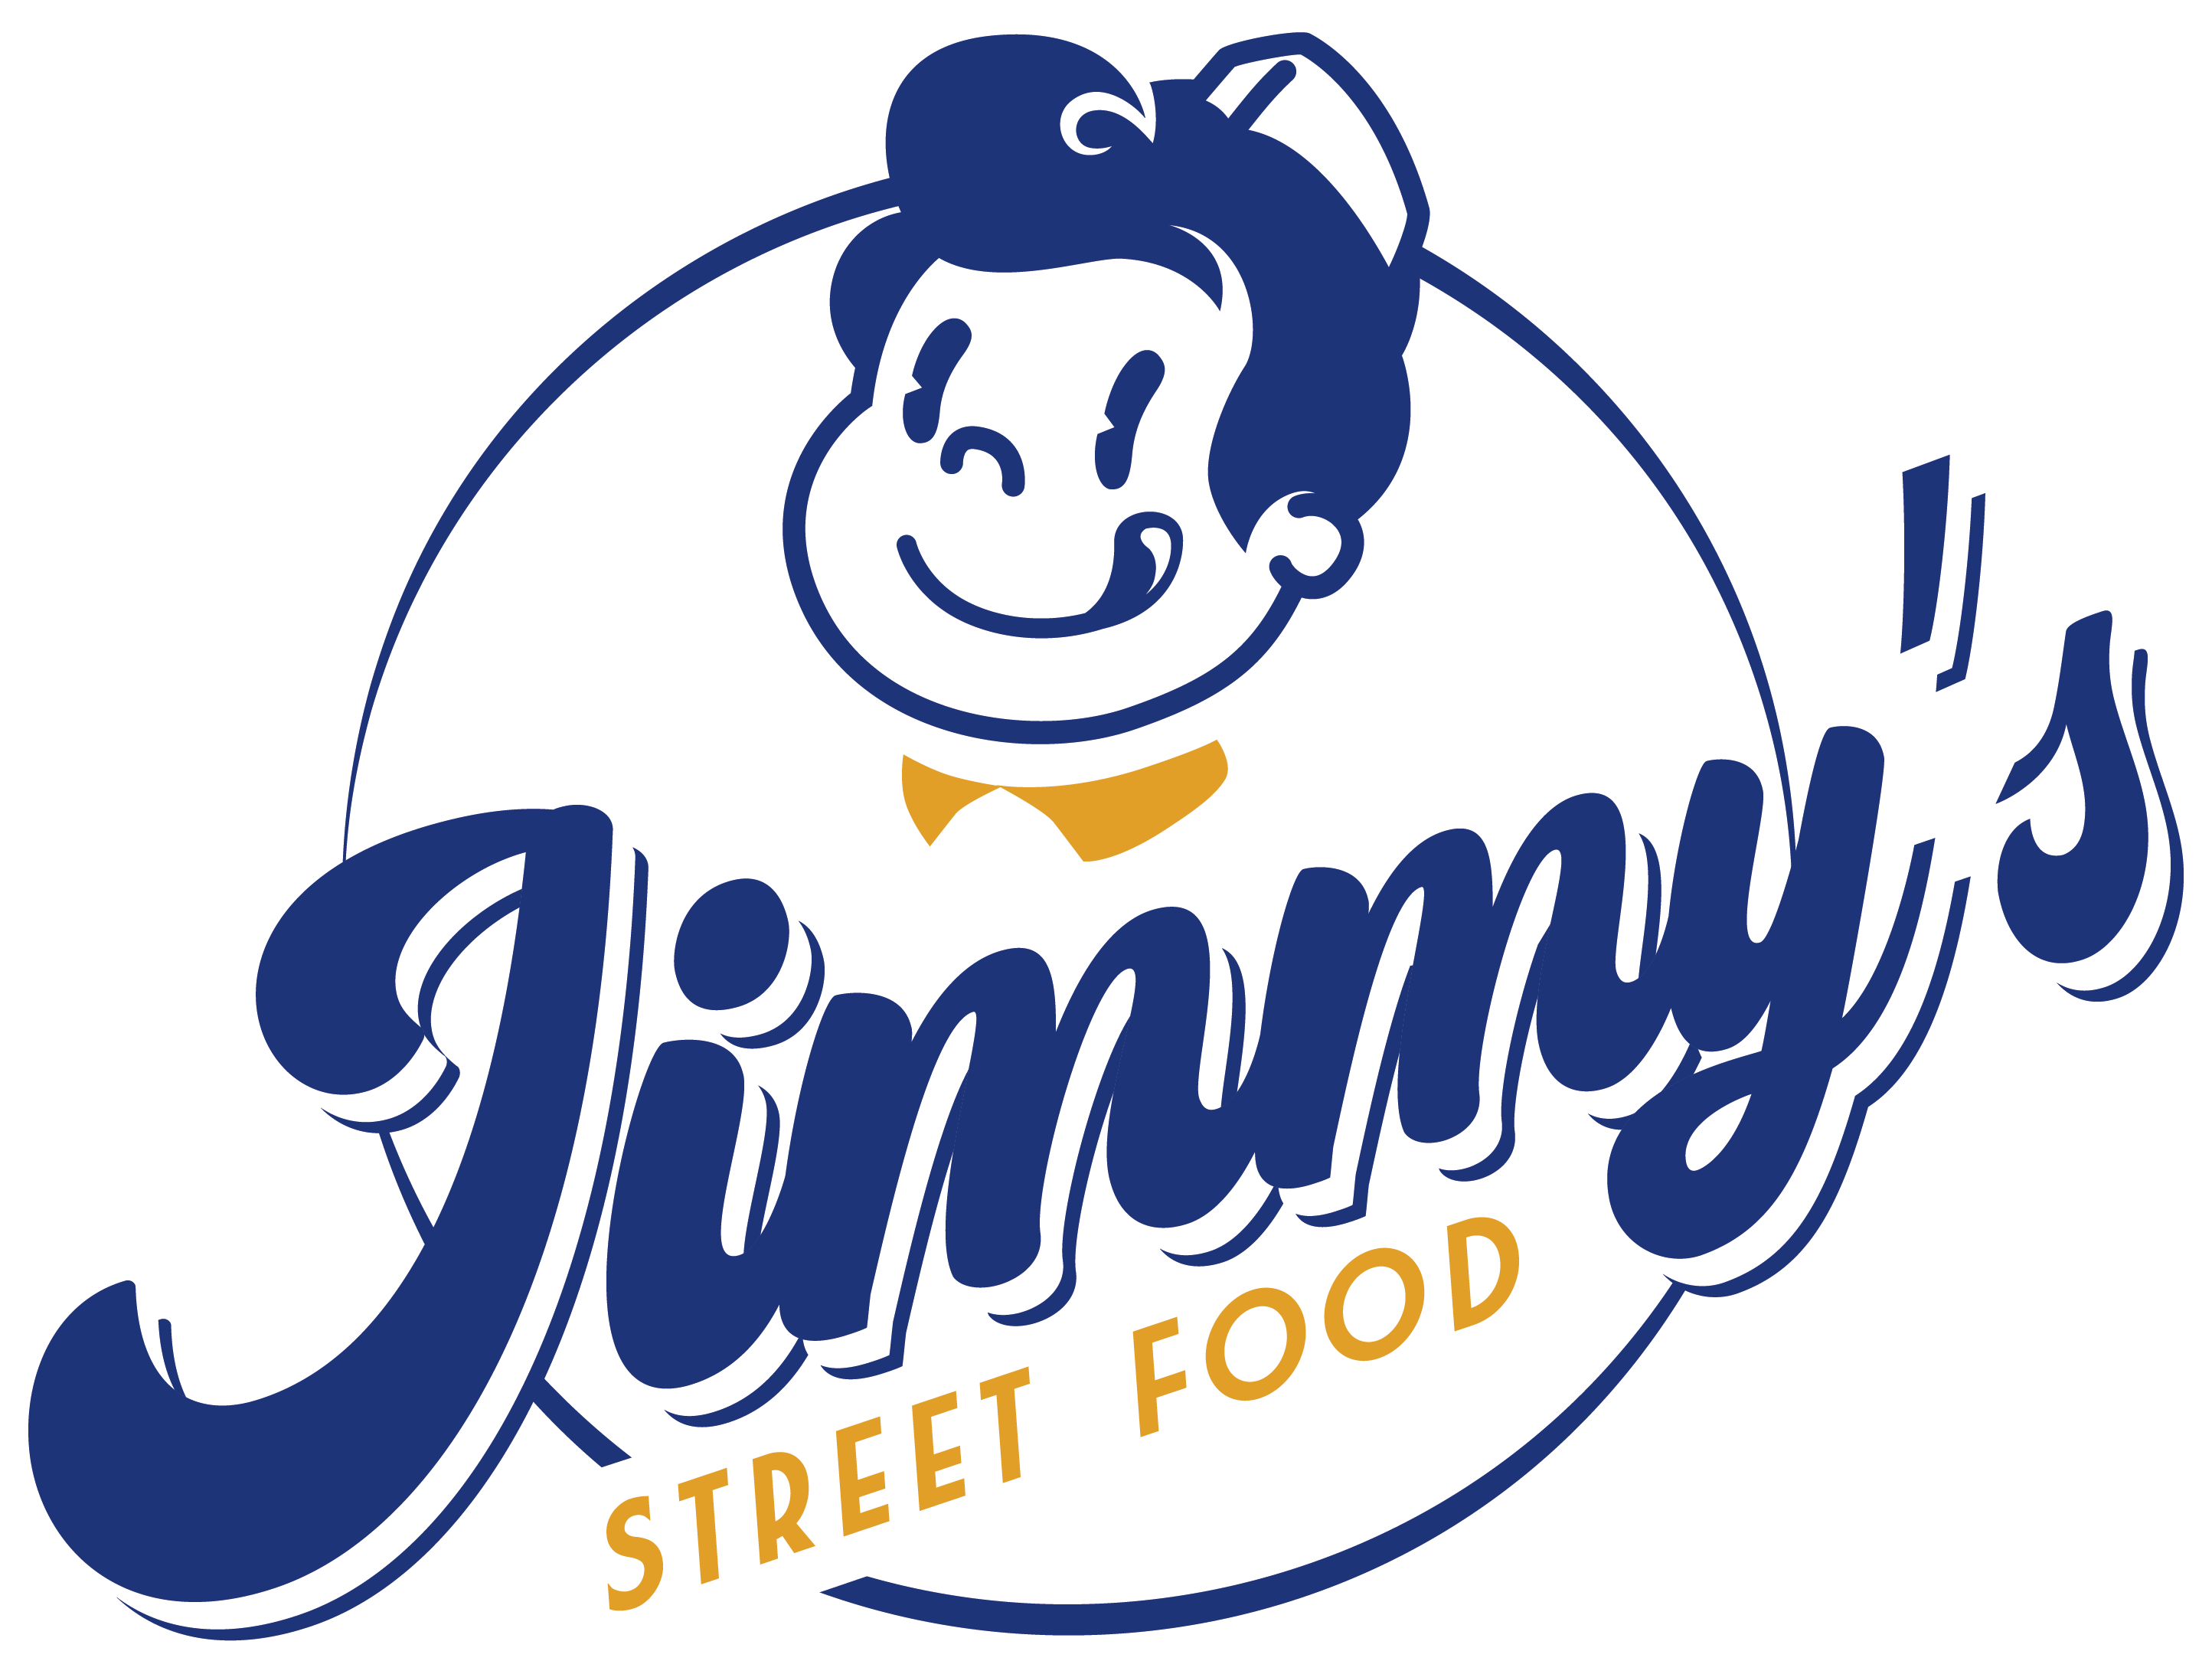 Jimmys Street Food